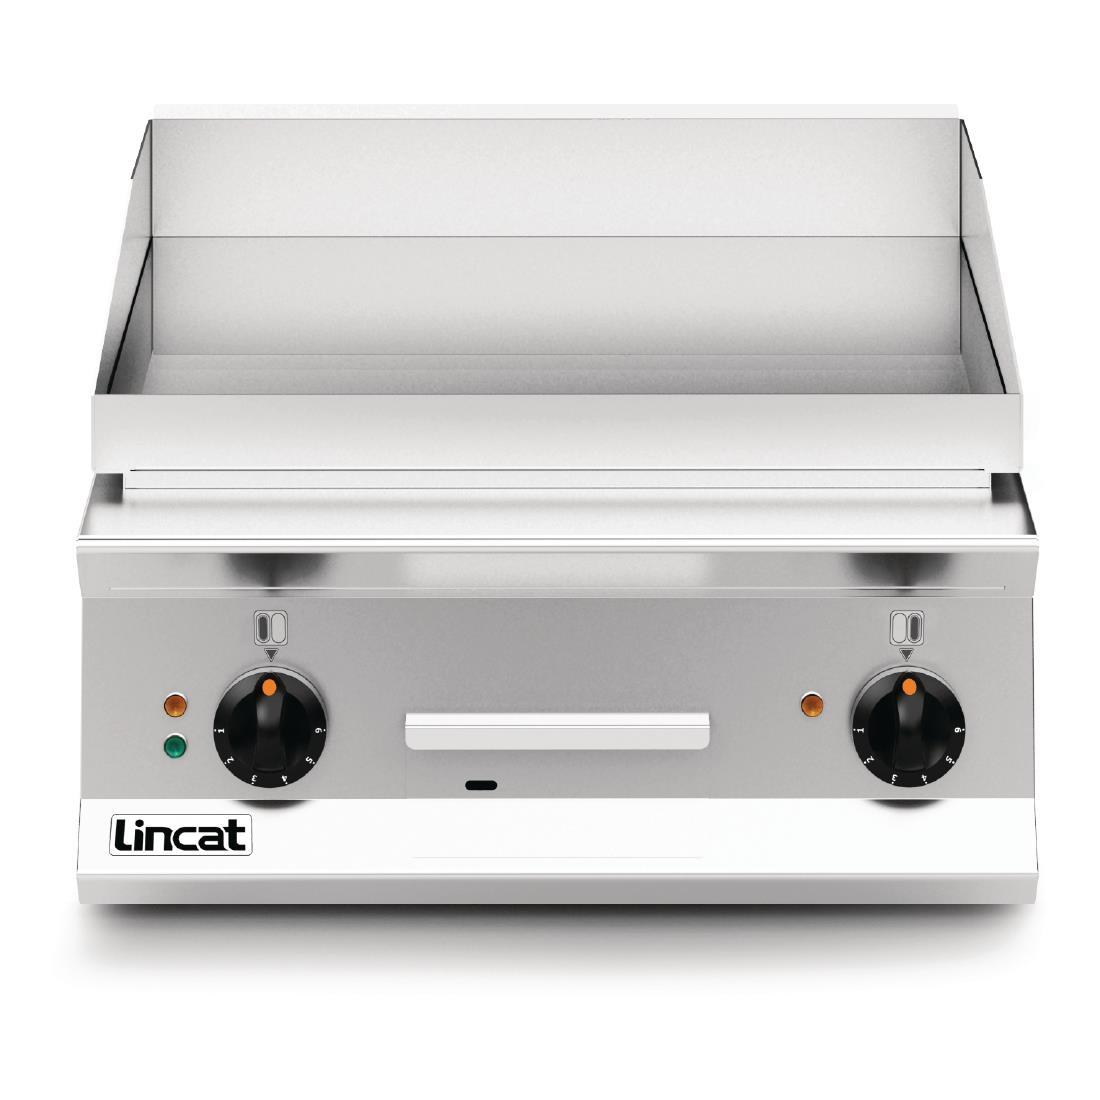 Lincat Opus 800 Chrome Griddle OE8205/C - DM552  - 3